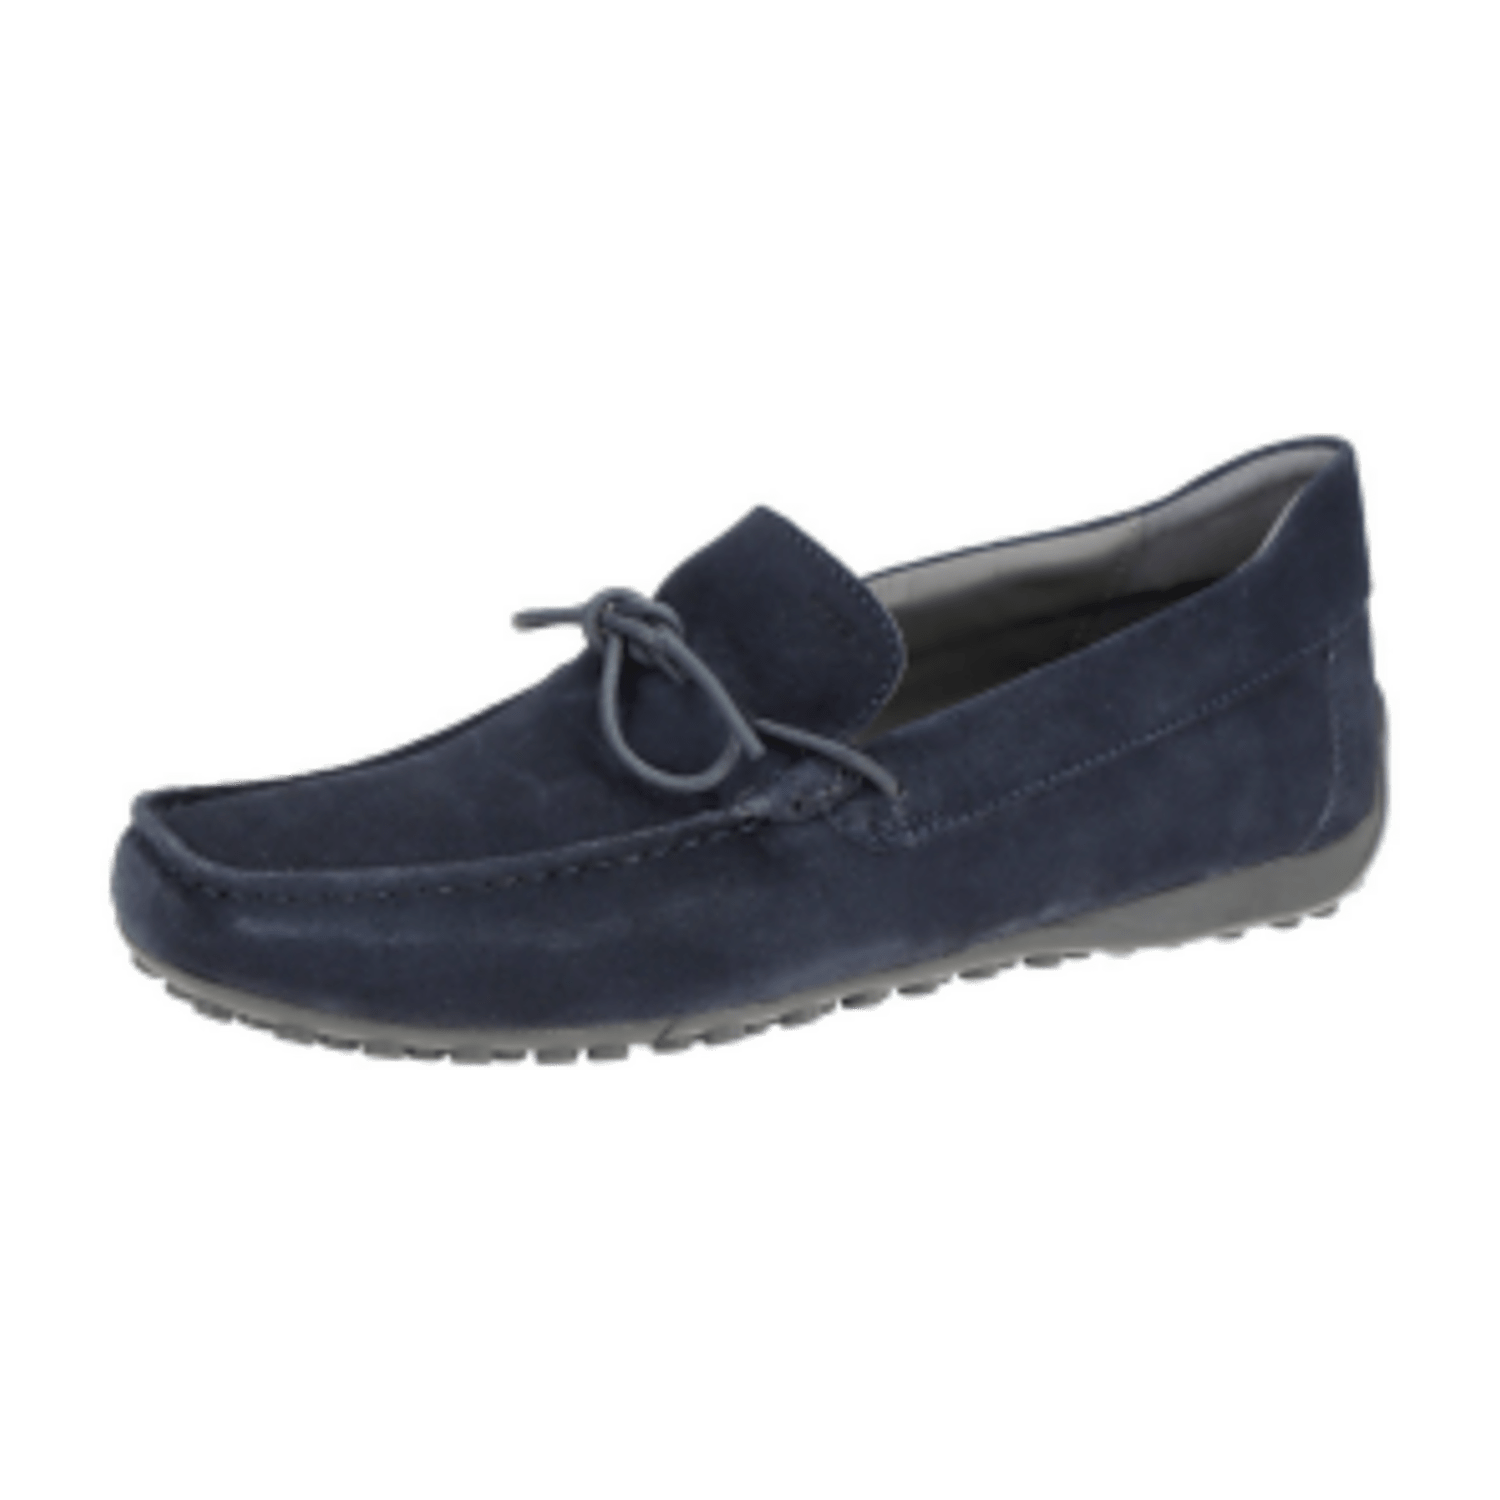 Geox Snake Mokassin Schuhe dunkel-blau Schleife U3507D